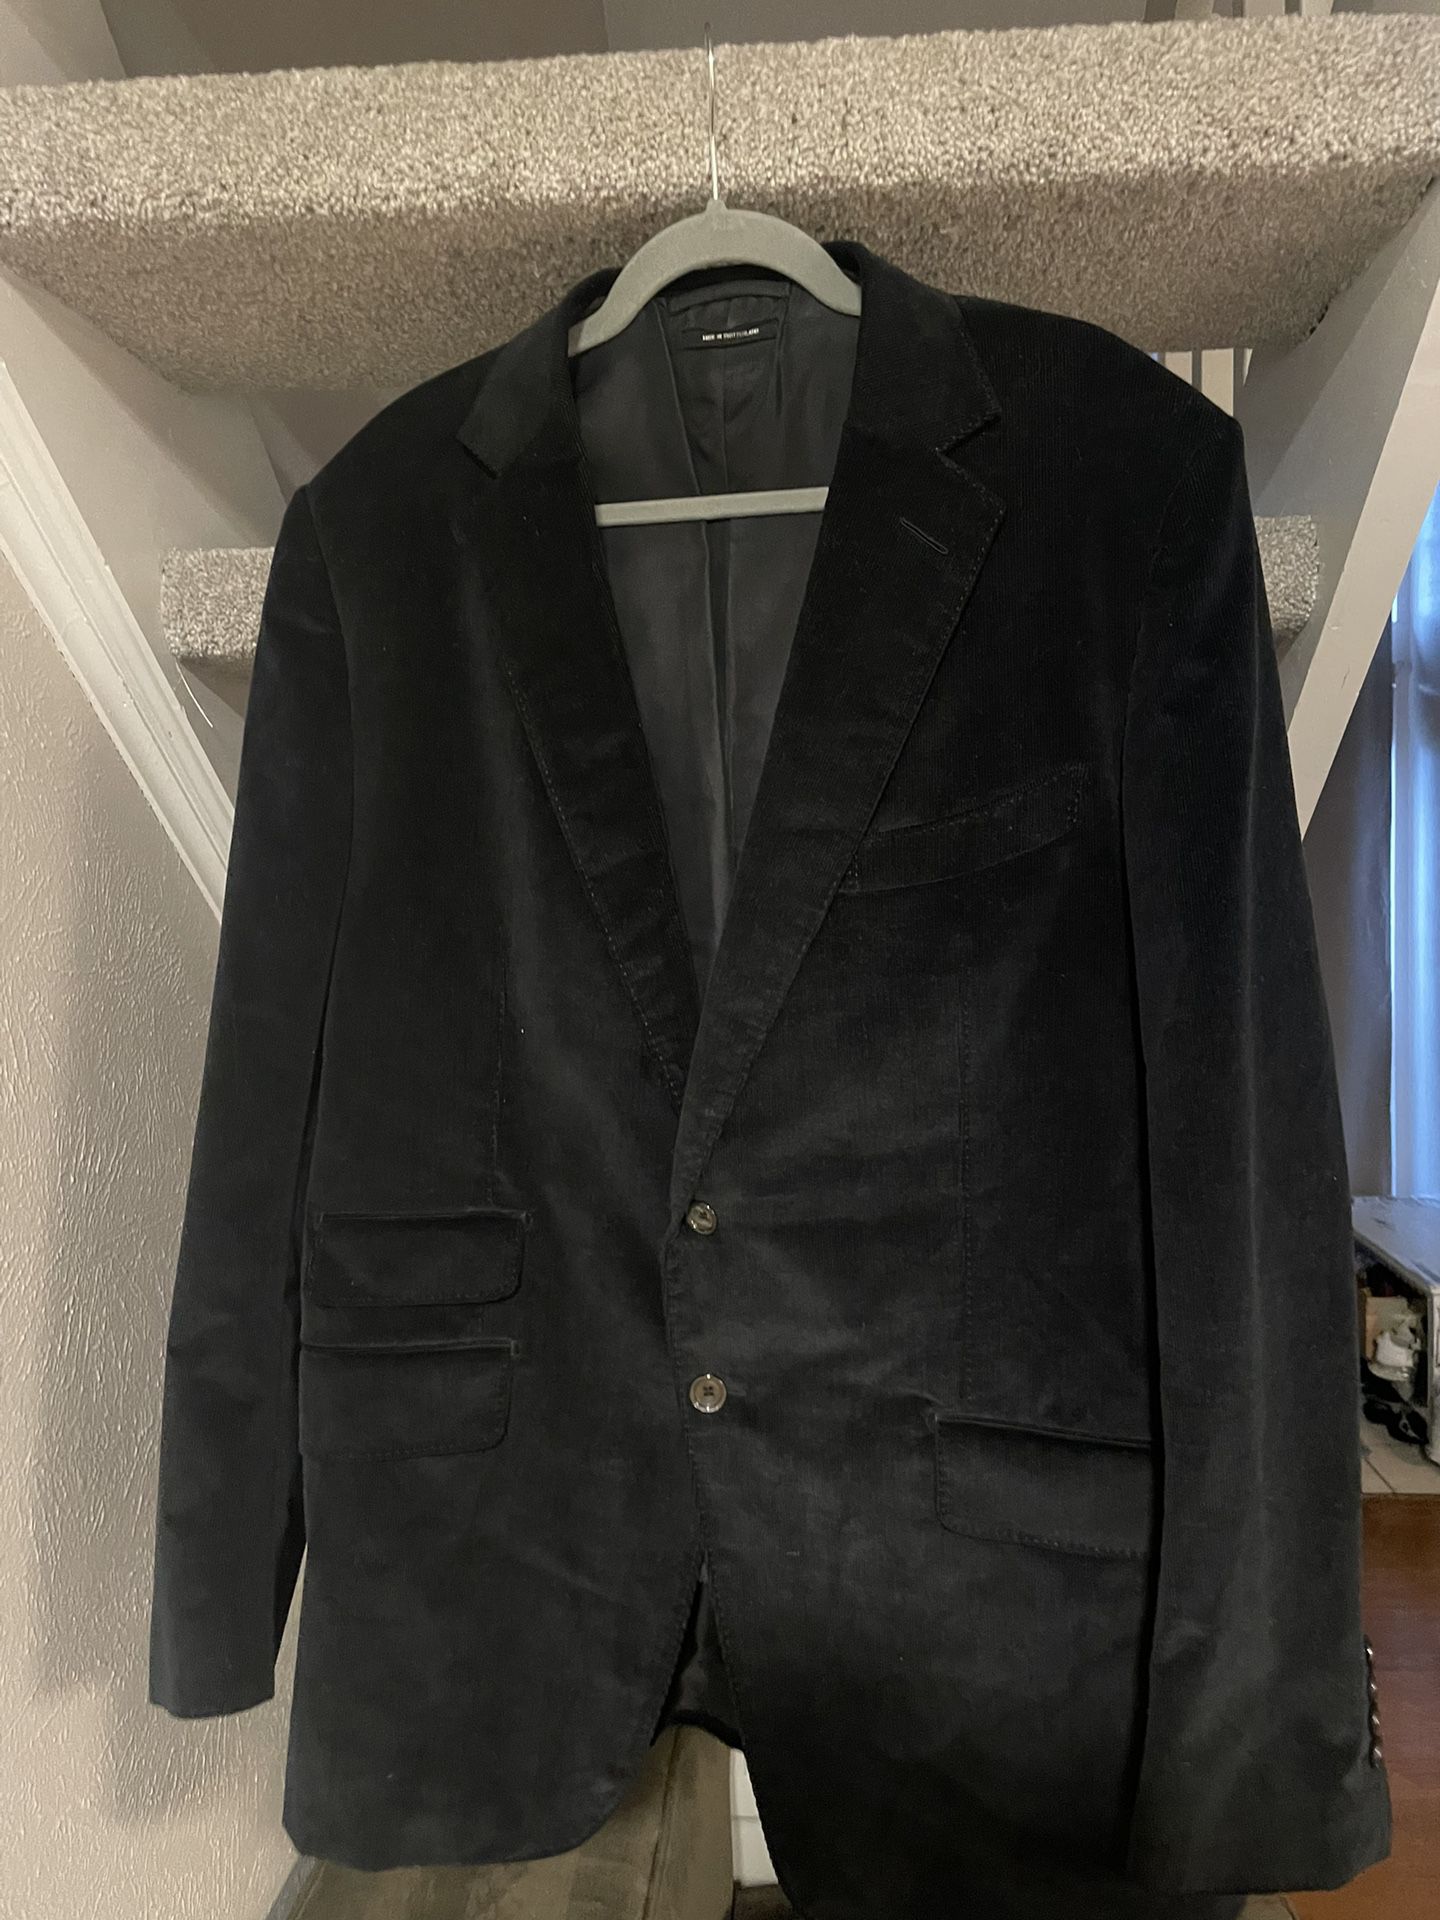 Tom Ford Black Corduroy Men’s Sports Suit, Coat Jacket